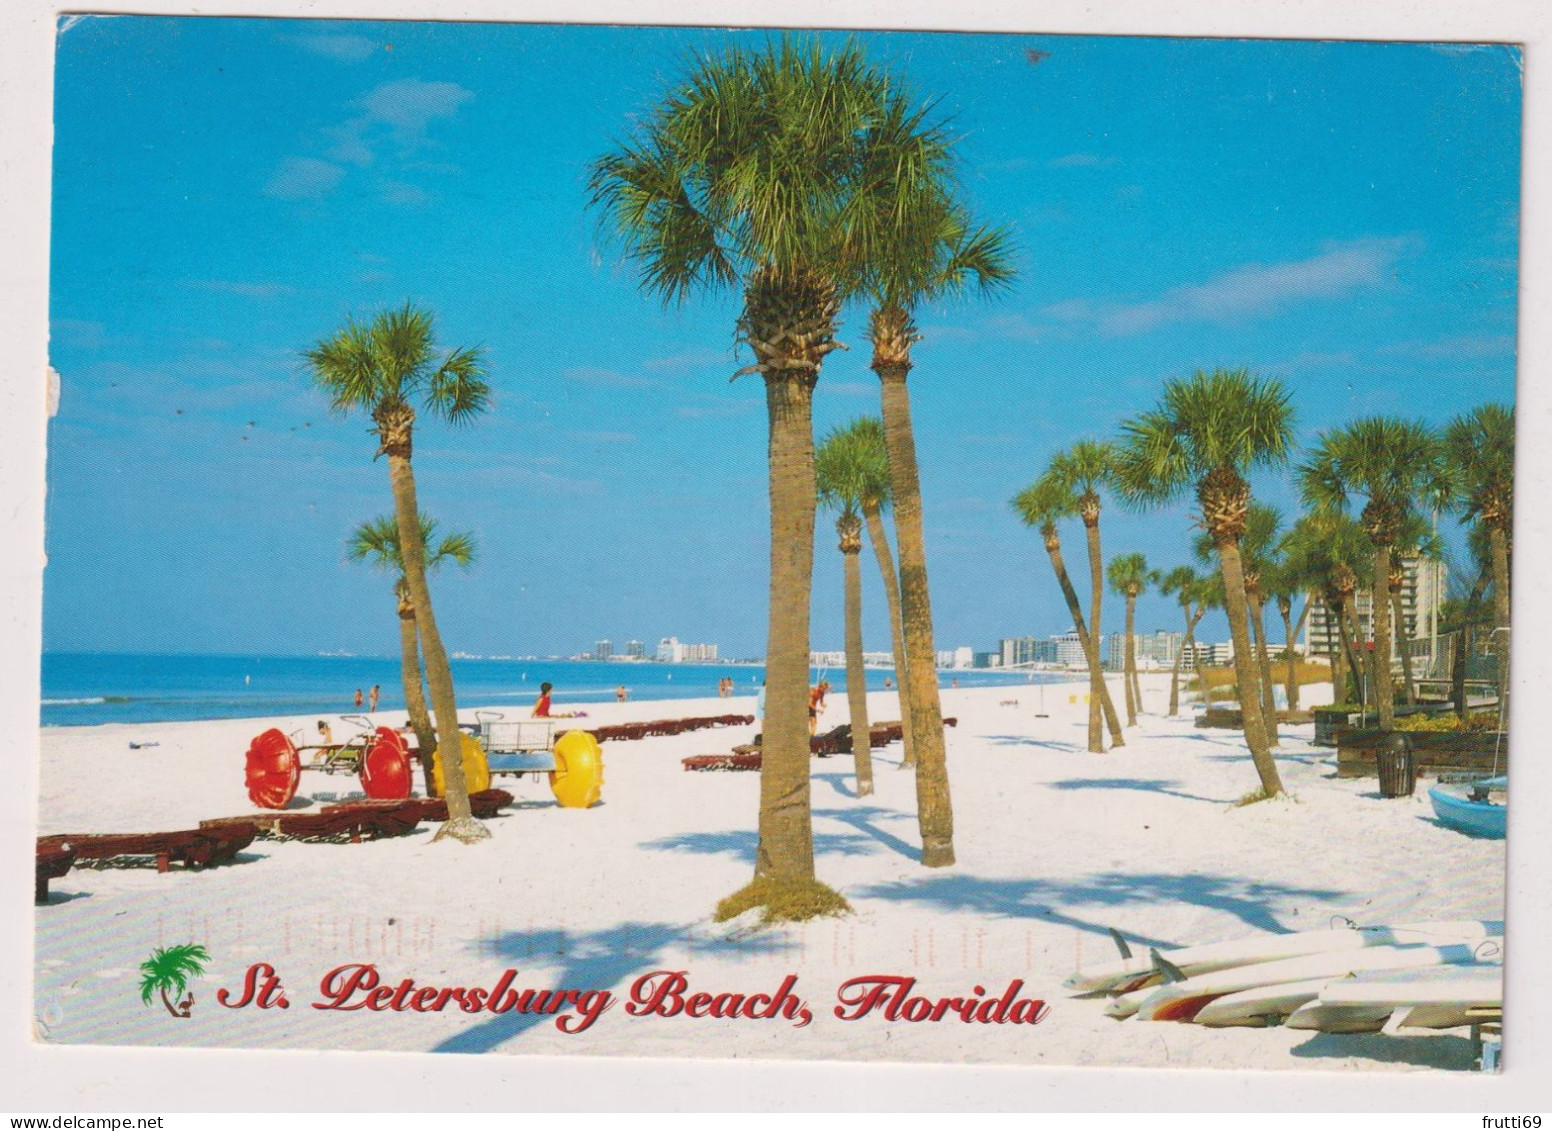 AK 198021 USA - Florida - St. Petersburg Beach - St Petersburg